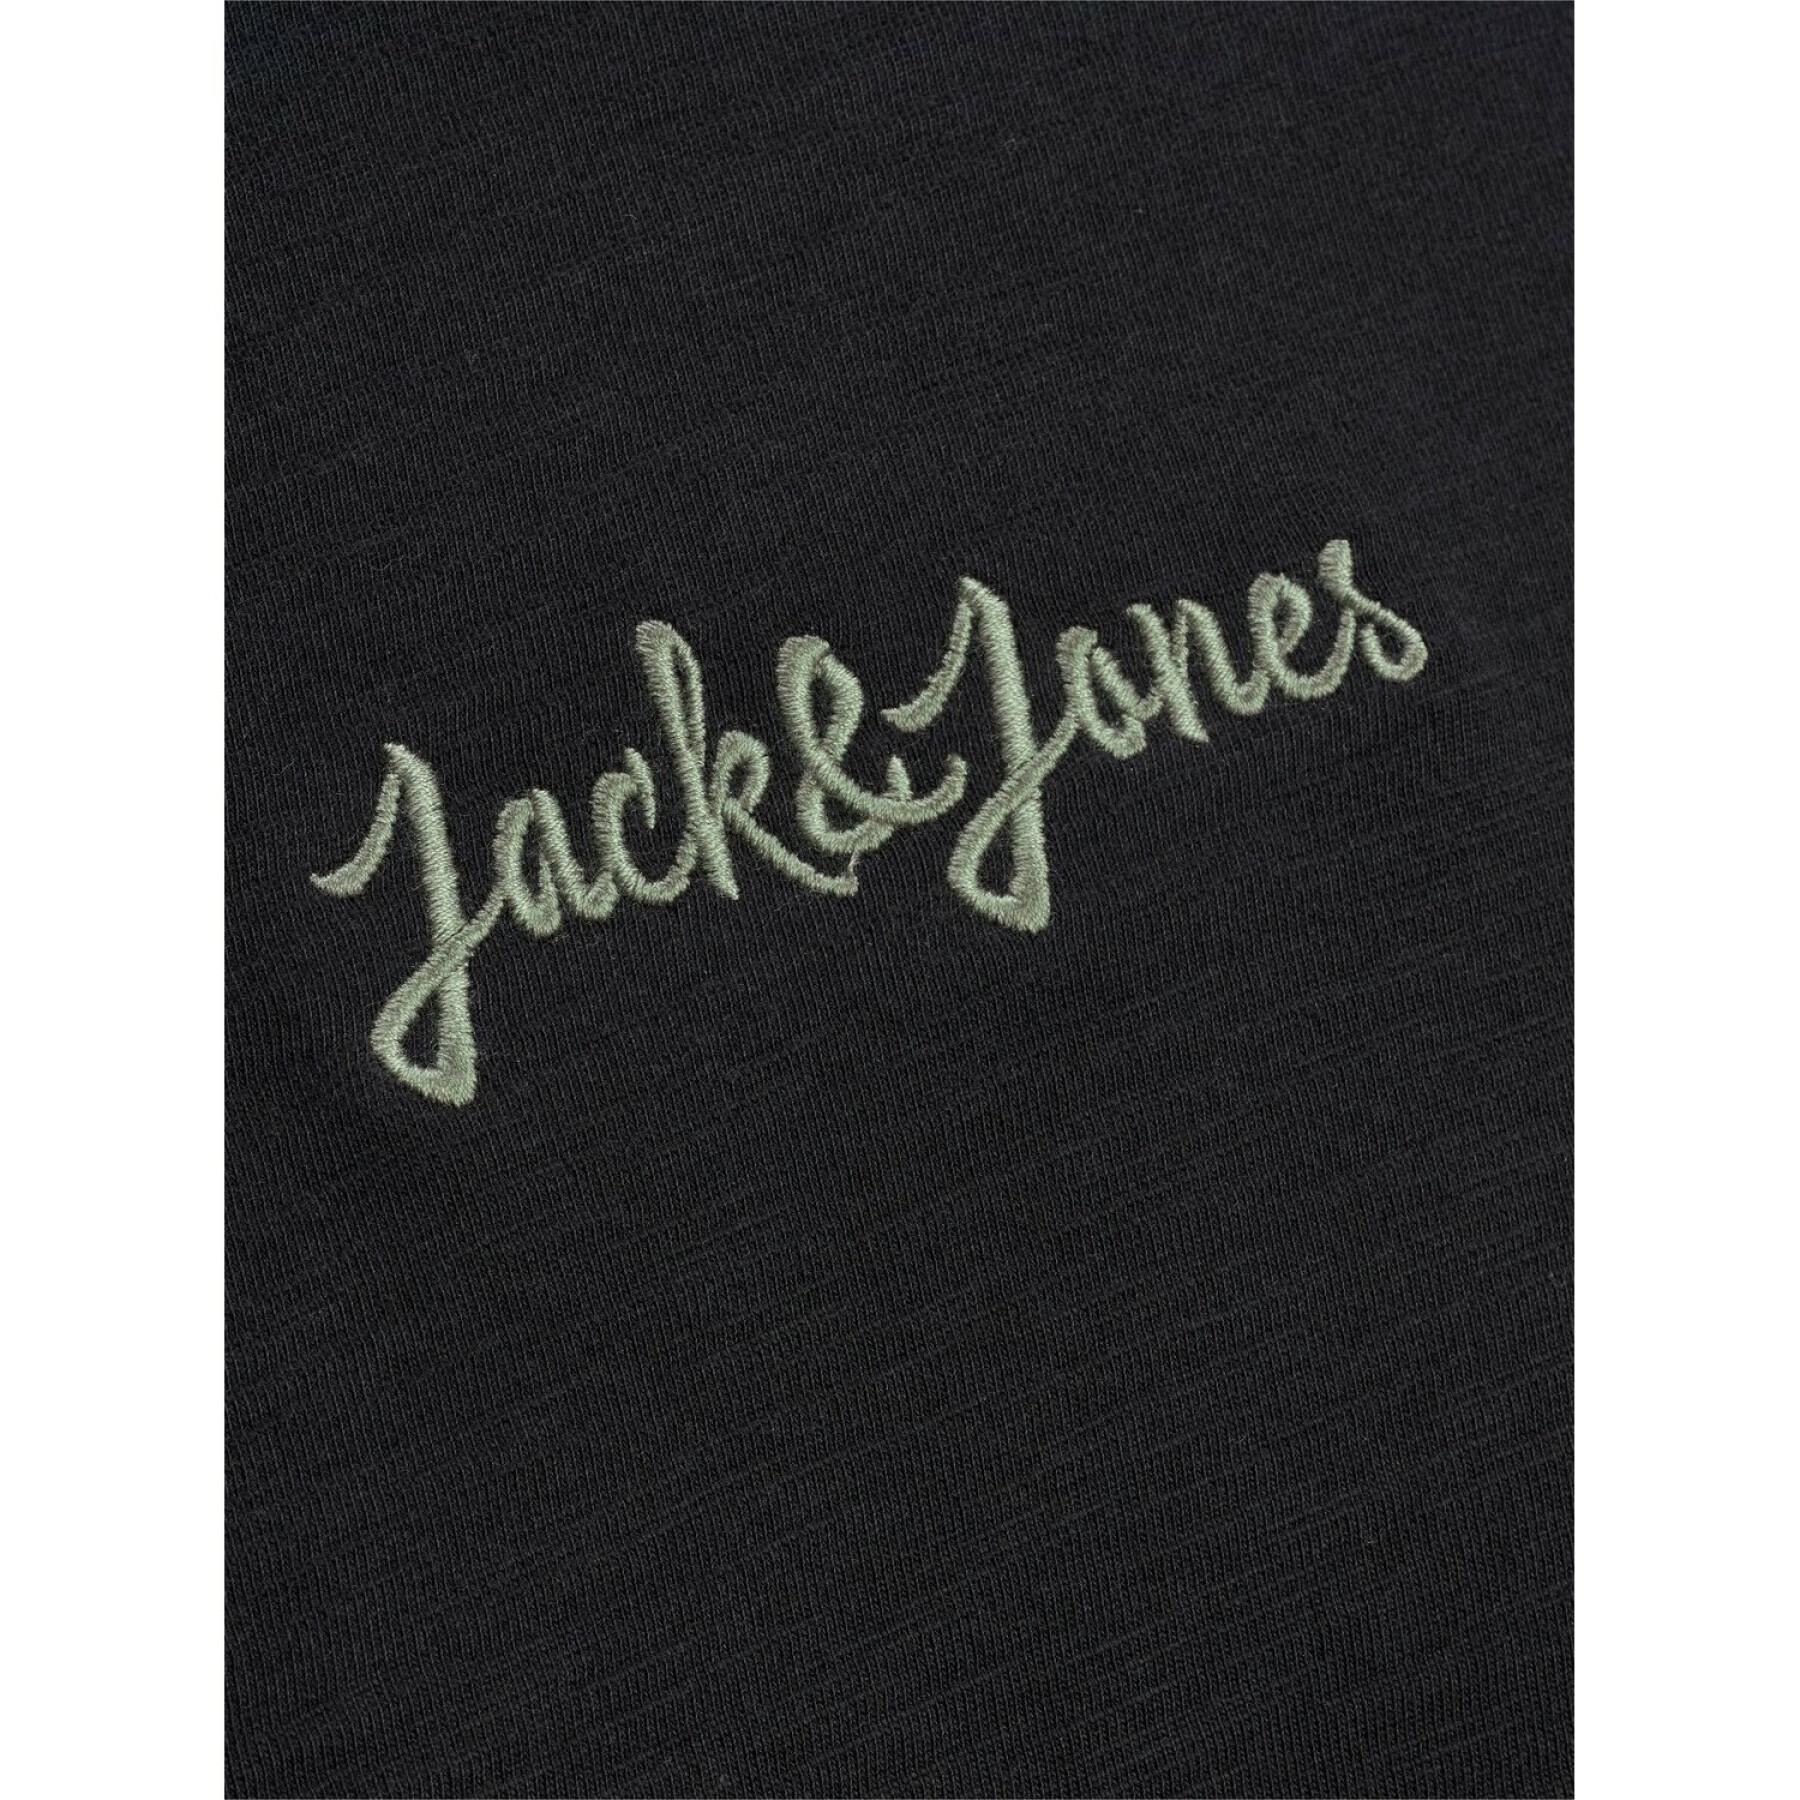 Koszulka Jack & Jones stockholm